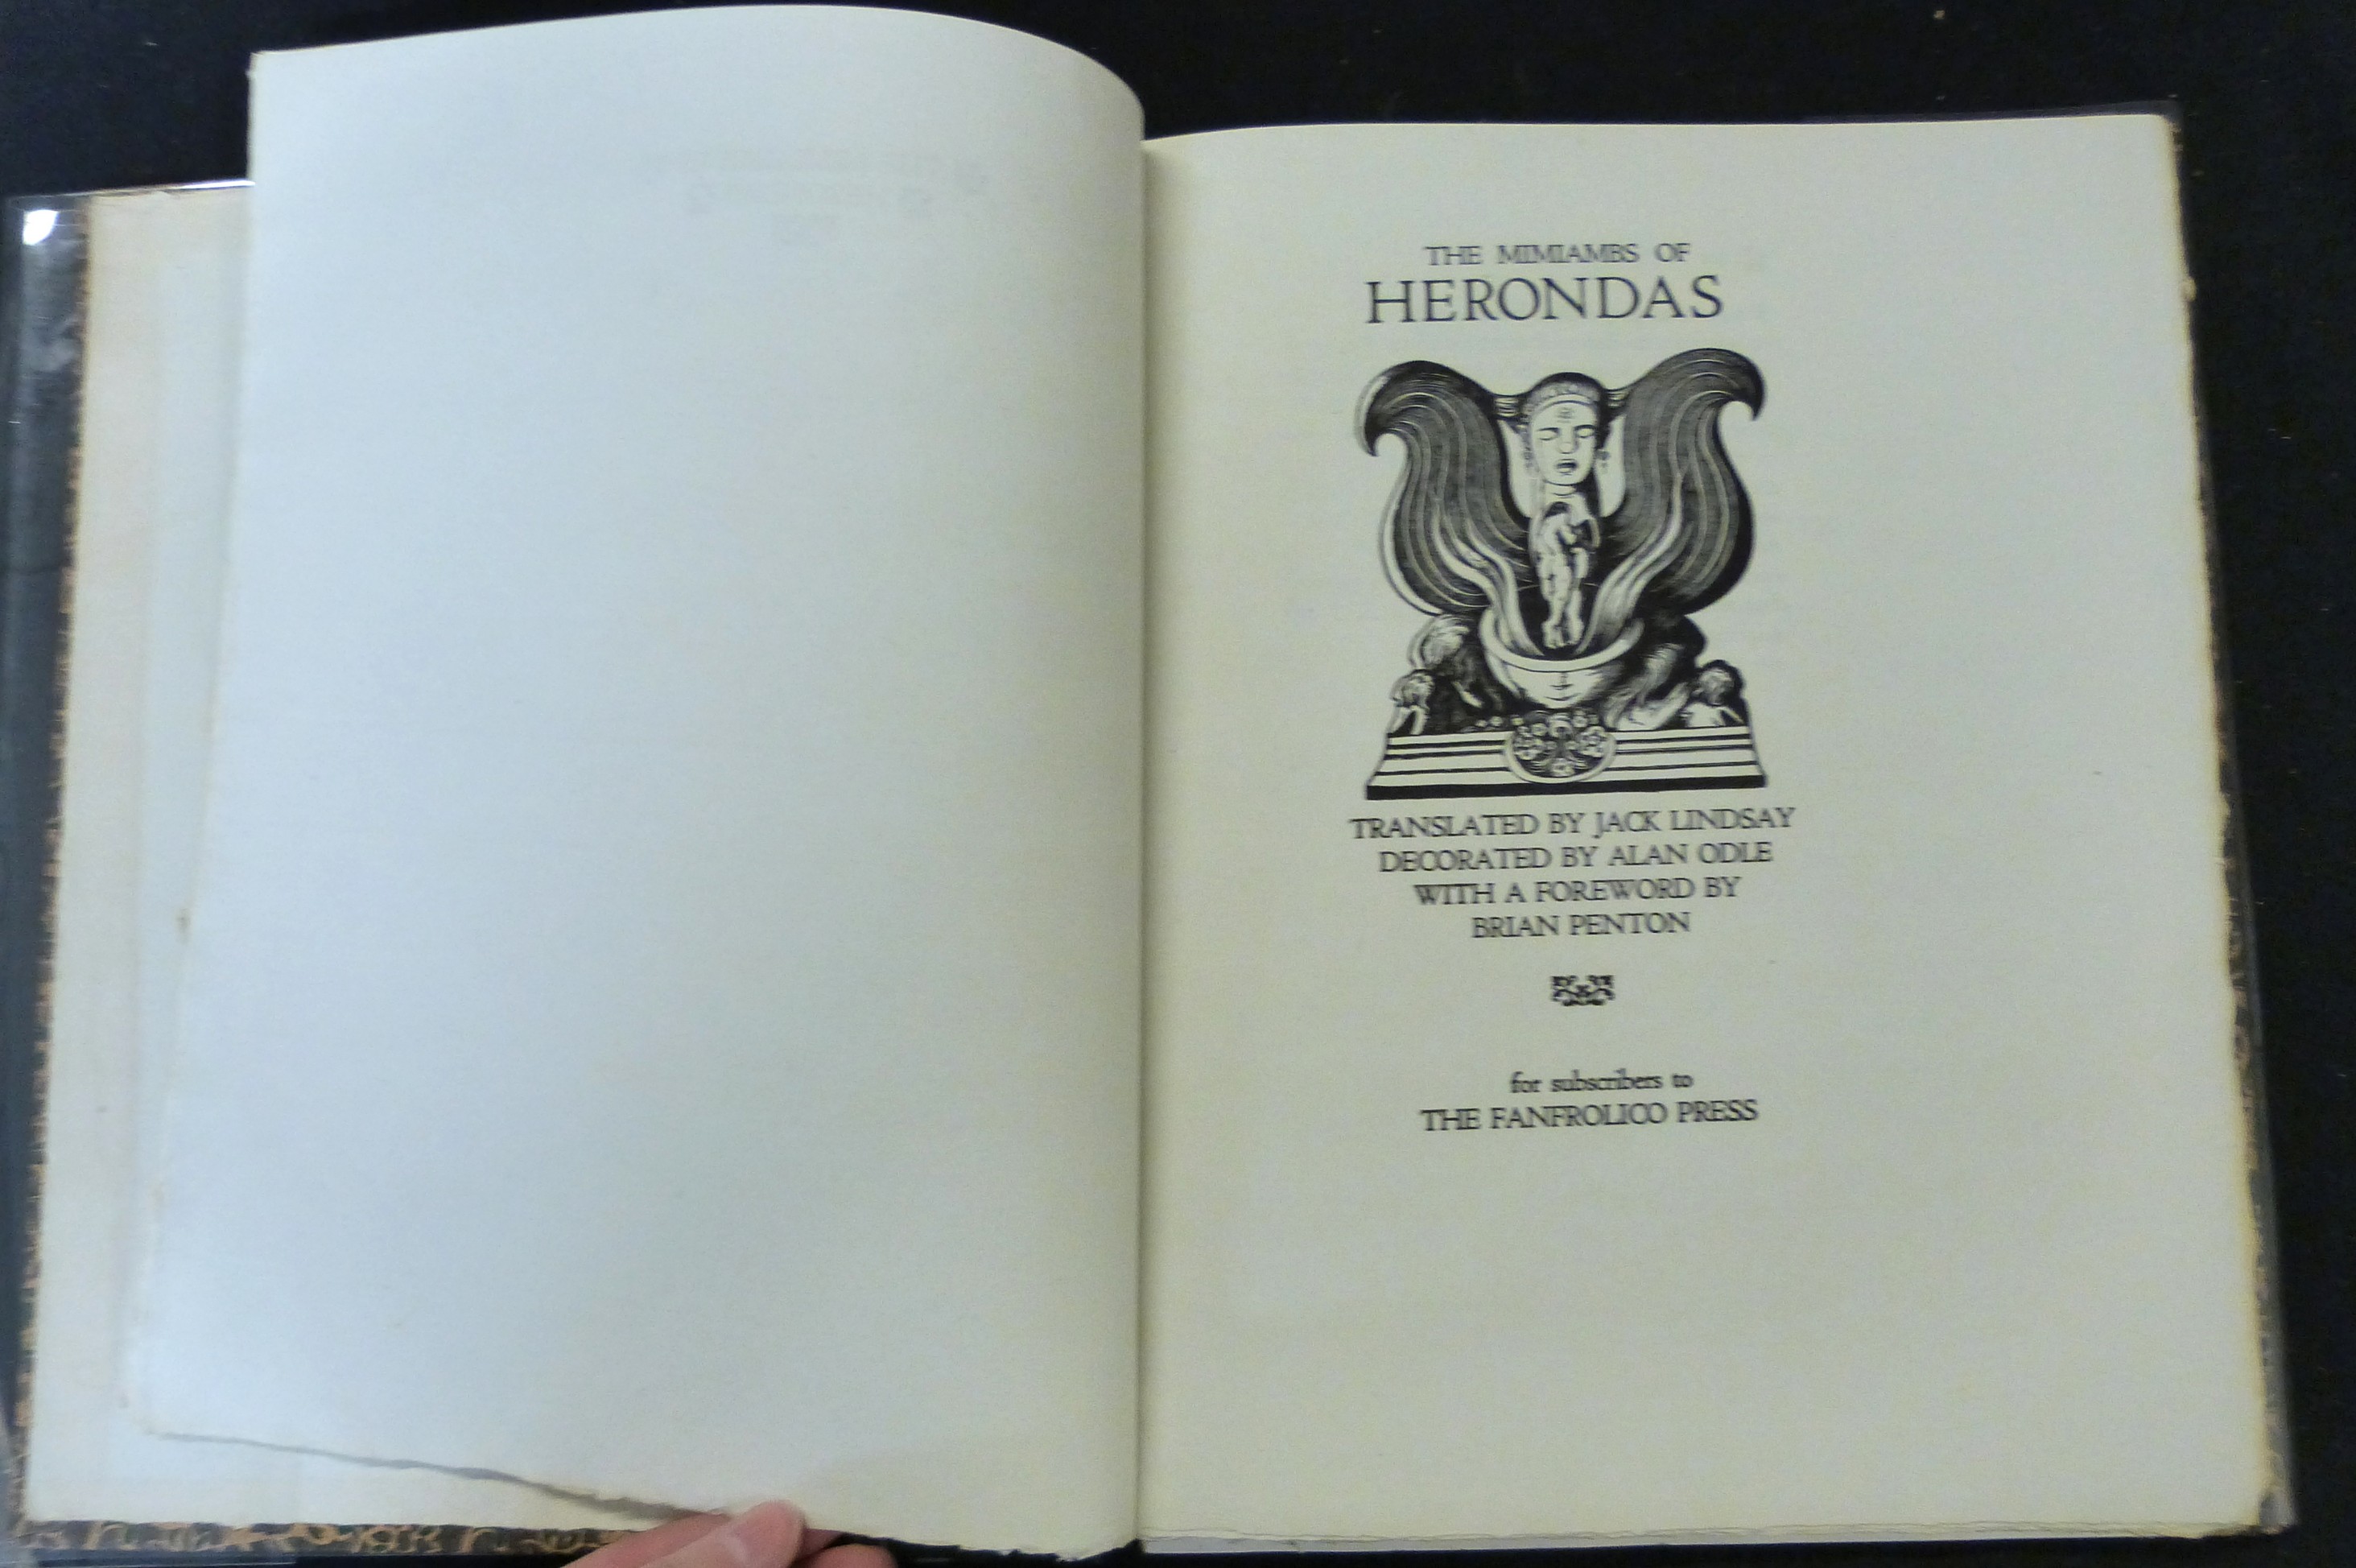 JACK LINDSAY (TRANS): THE MIMIAMBS OF HERONDAS, ill Alan Odle, foreword Brian Penton, London, The